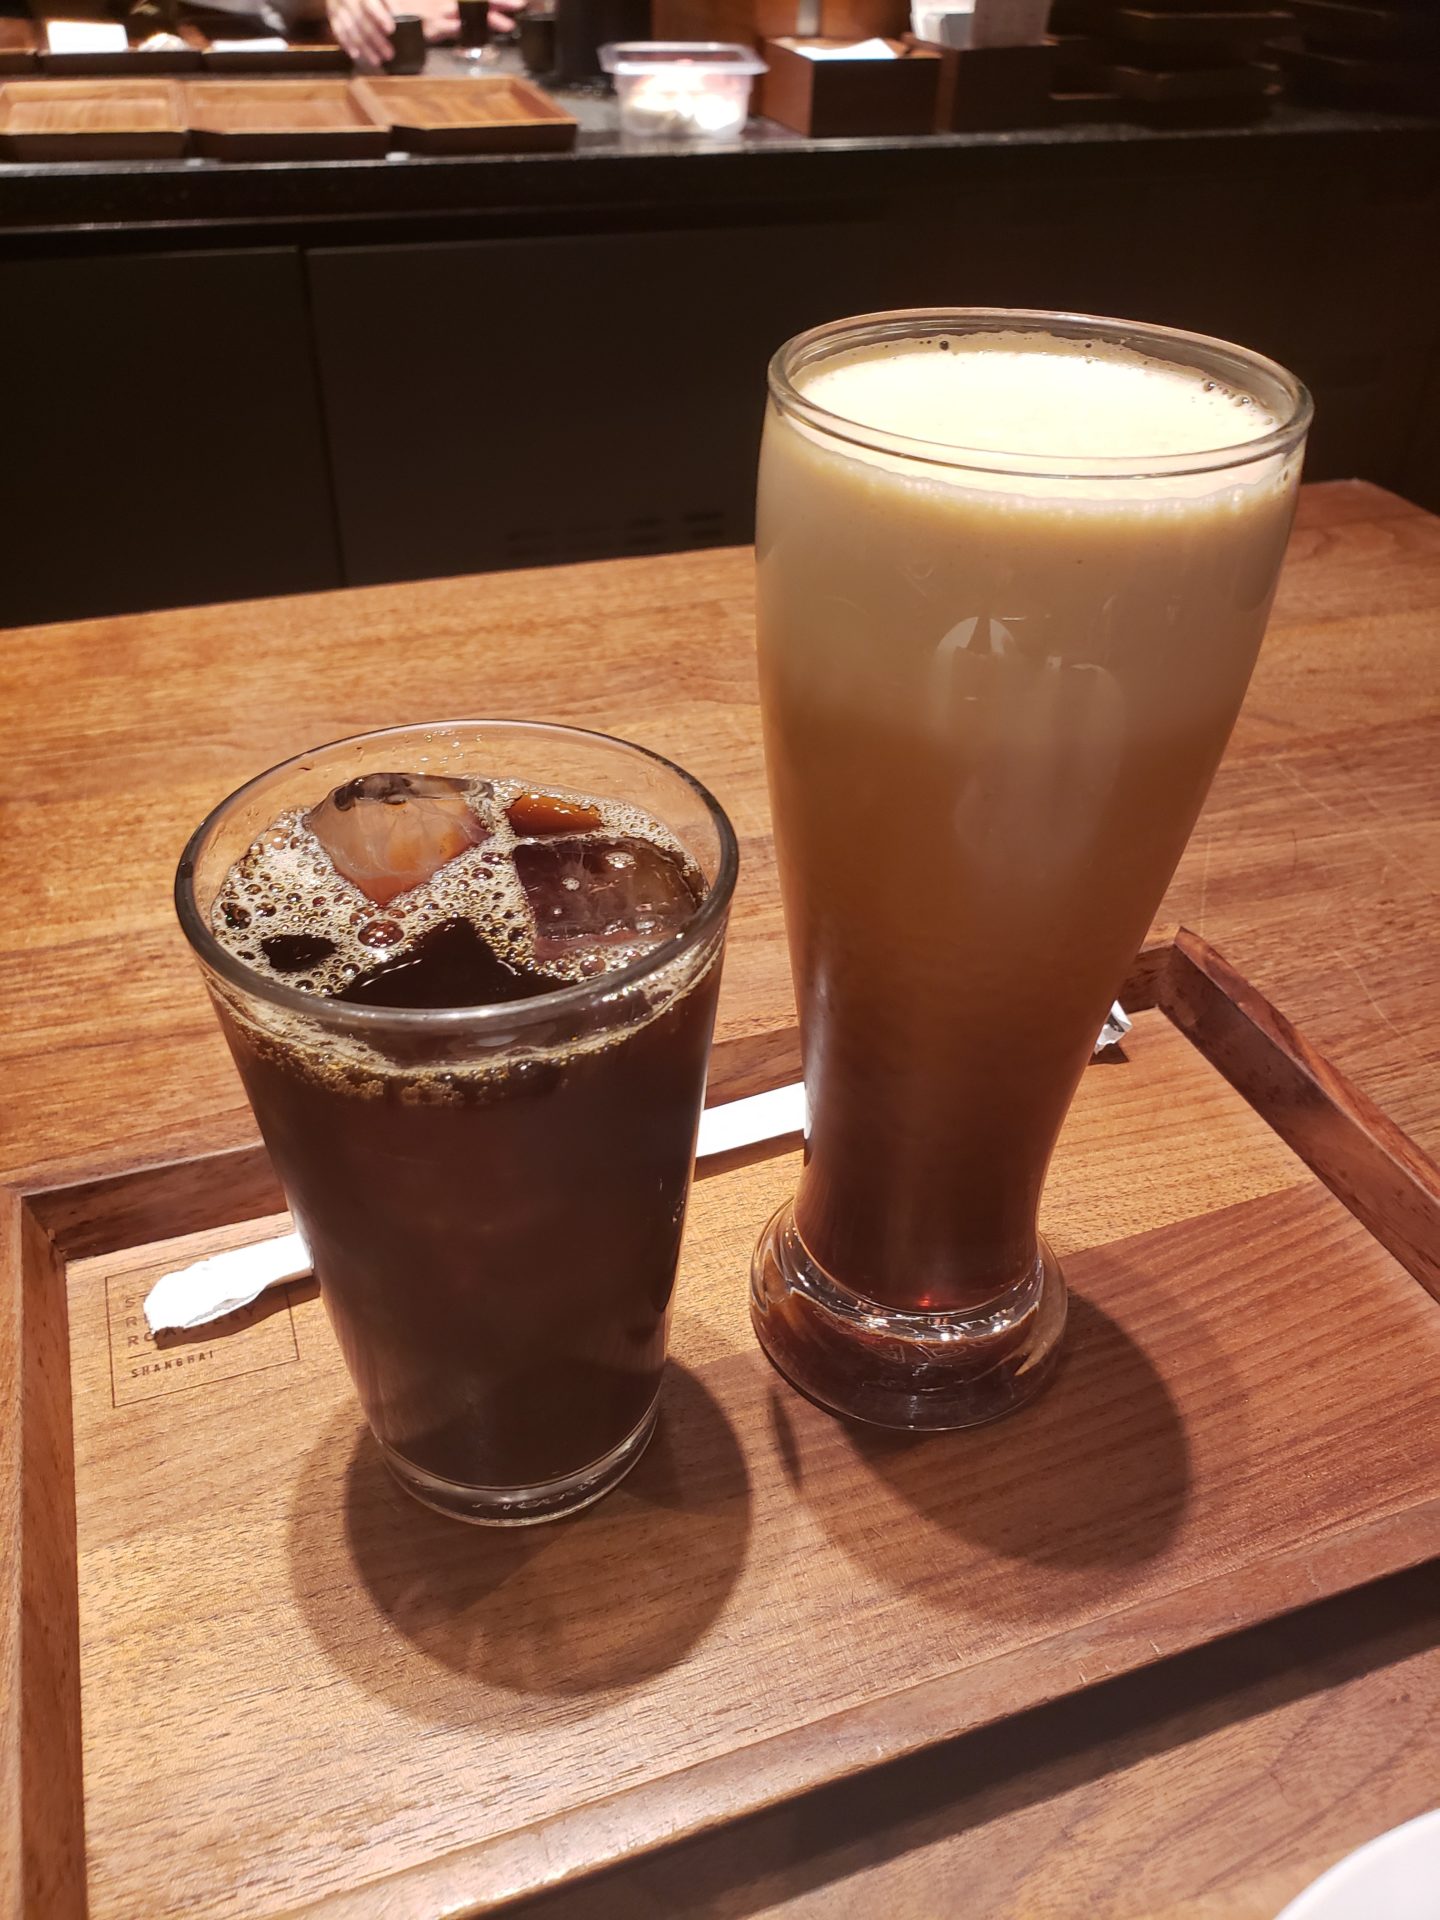 a glass of liquid next to a glass of liquid